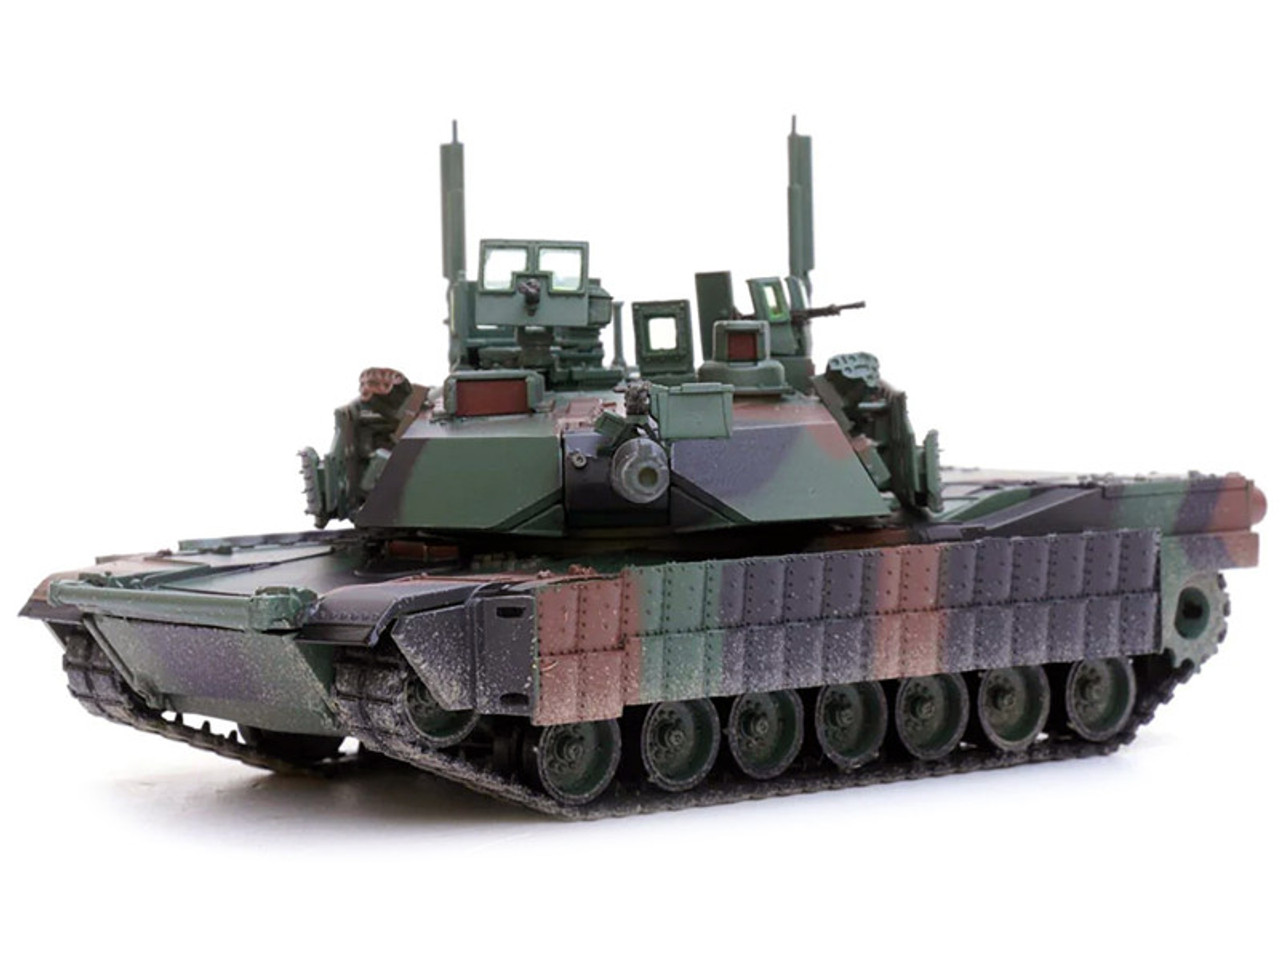 General Dynamics M1A2 Abrams TUSK II MBT (Main Battle Tank) NATO Camouflage "Armor Premium" Series 1/72 Diecast Model by Panzerkampf